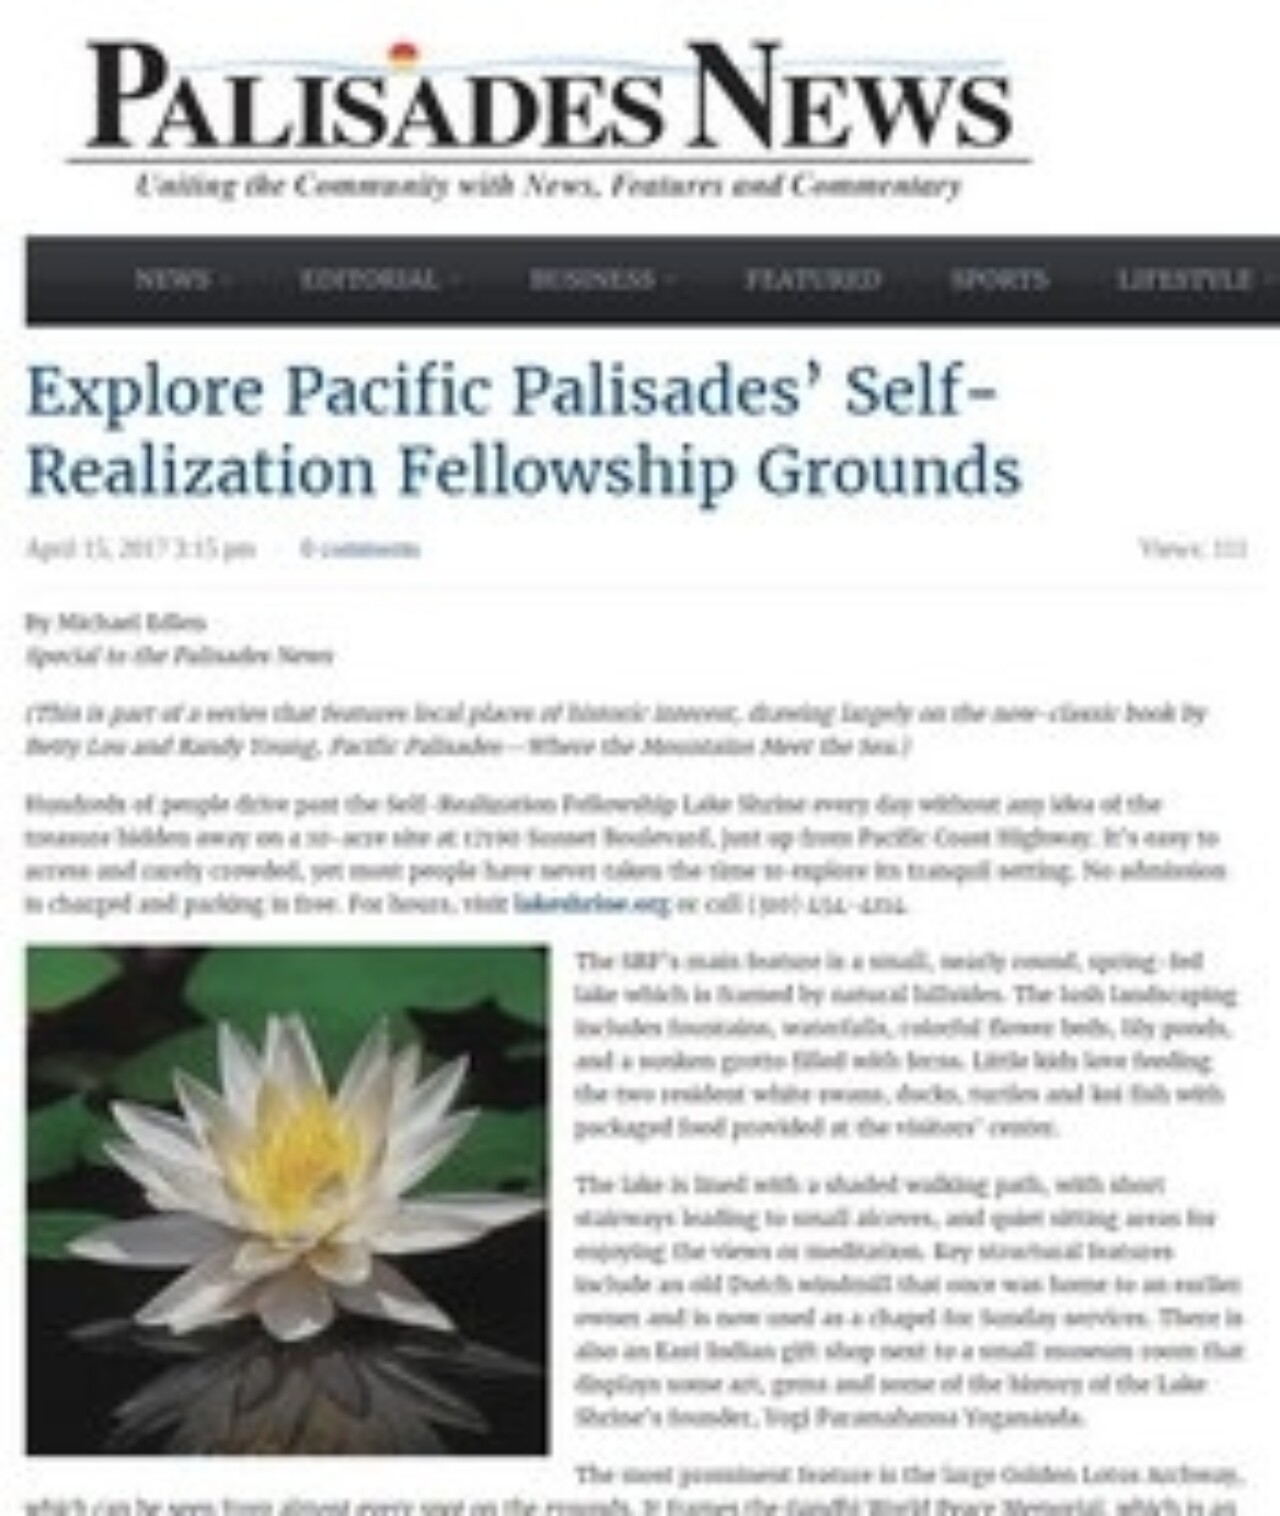 Palisades News features the SRF Lake Shrine